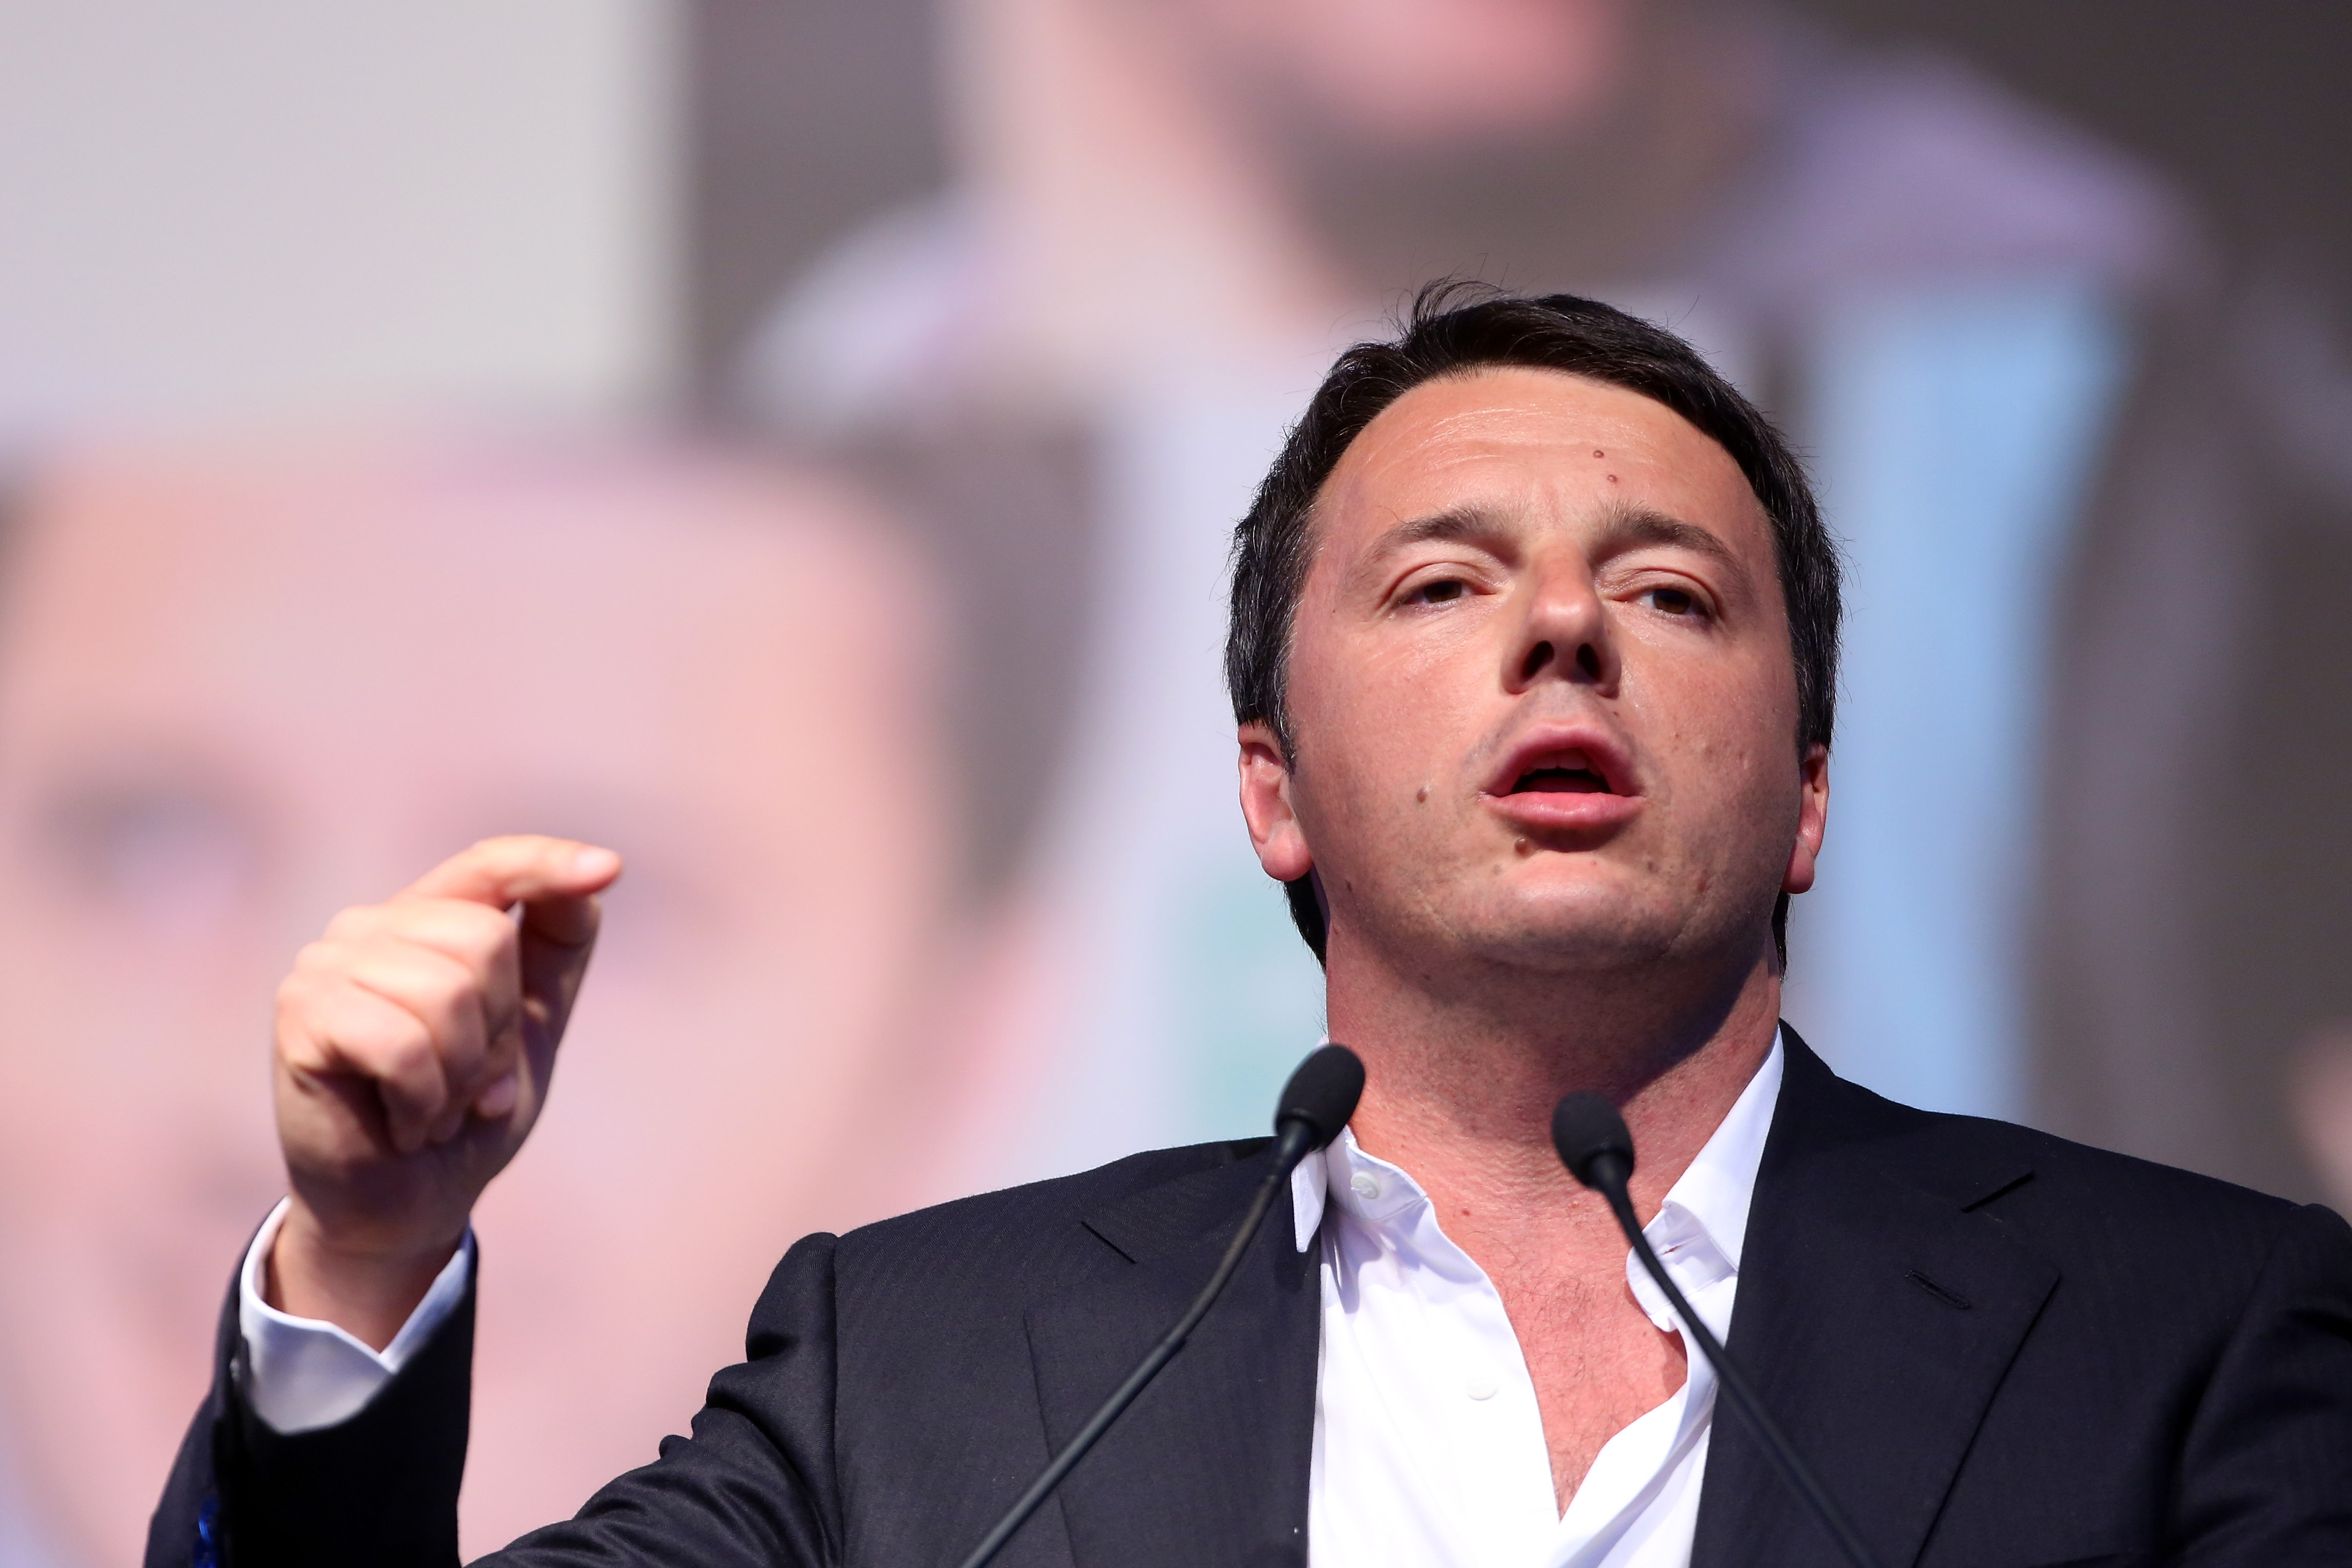 Streit um Flüchtlinge: Renzi droht mit Veto gegen EU-Haushalt